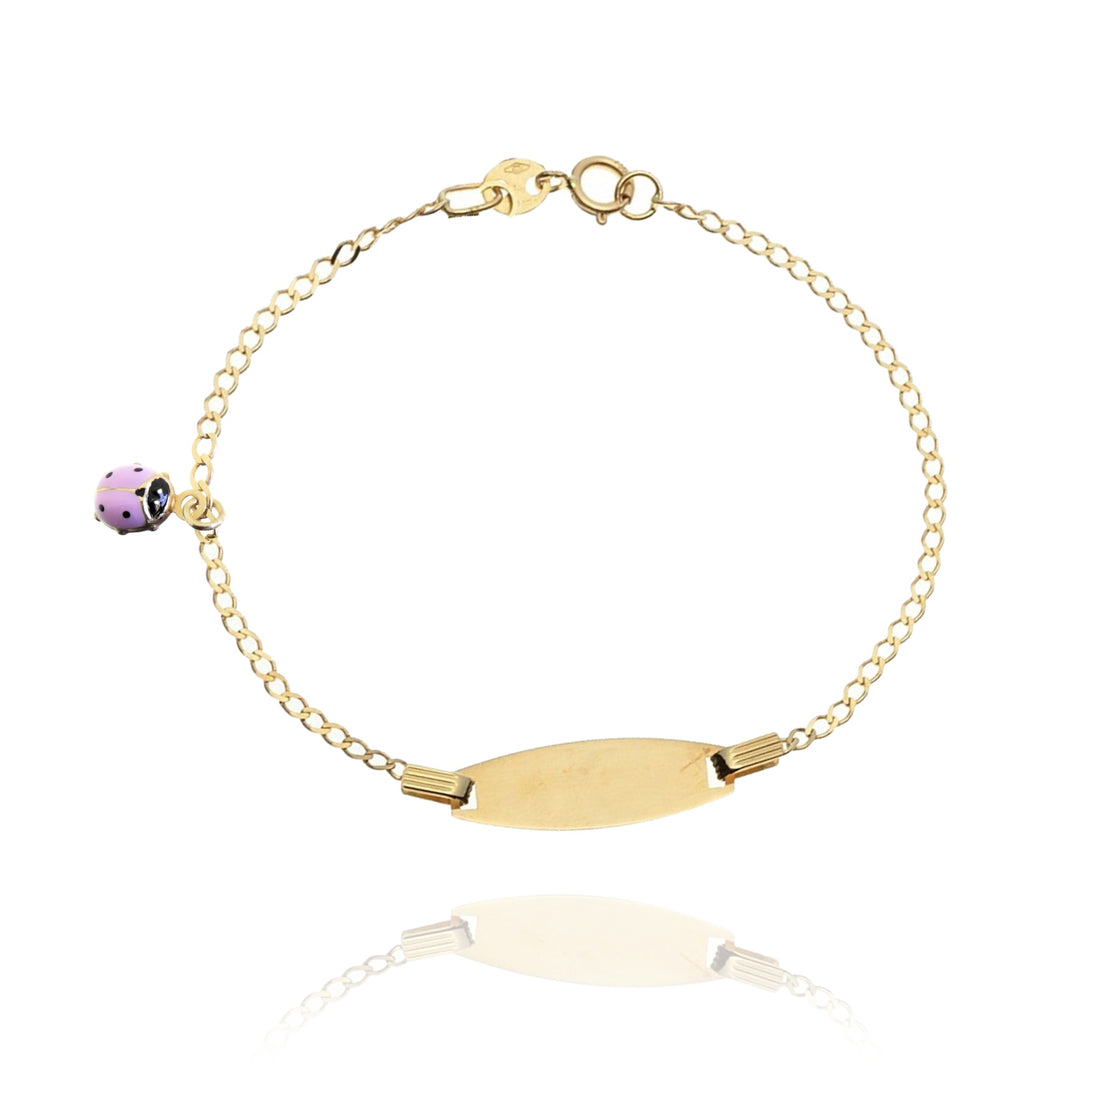 Ladybug Bracelet in Gold - 766352